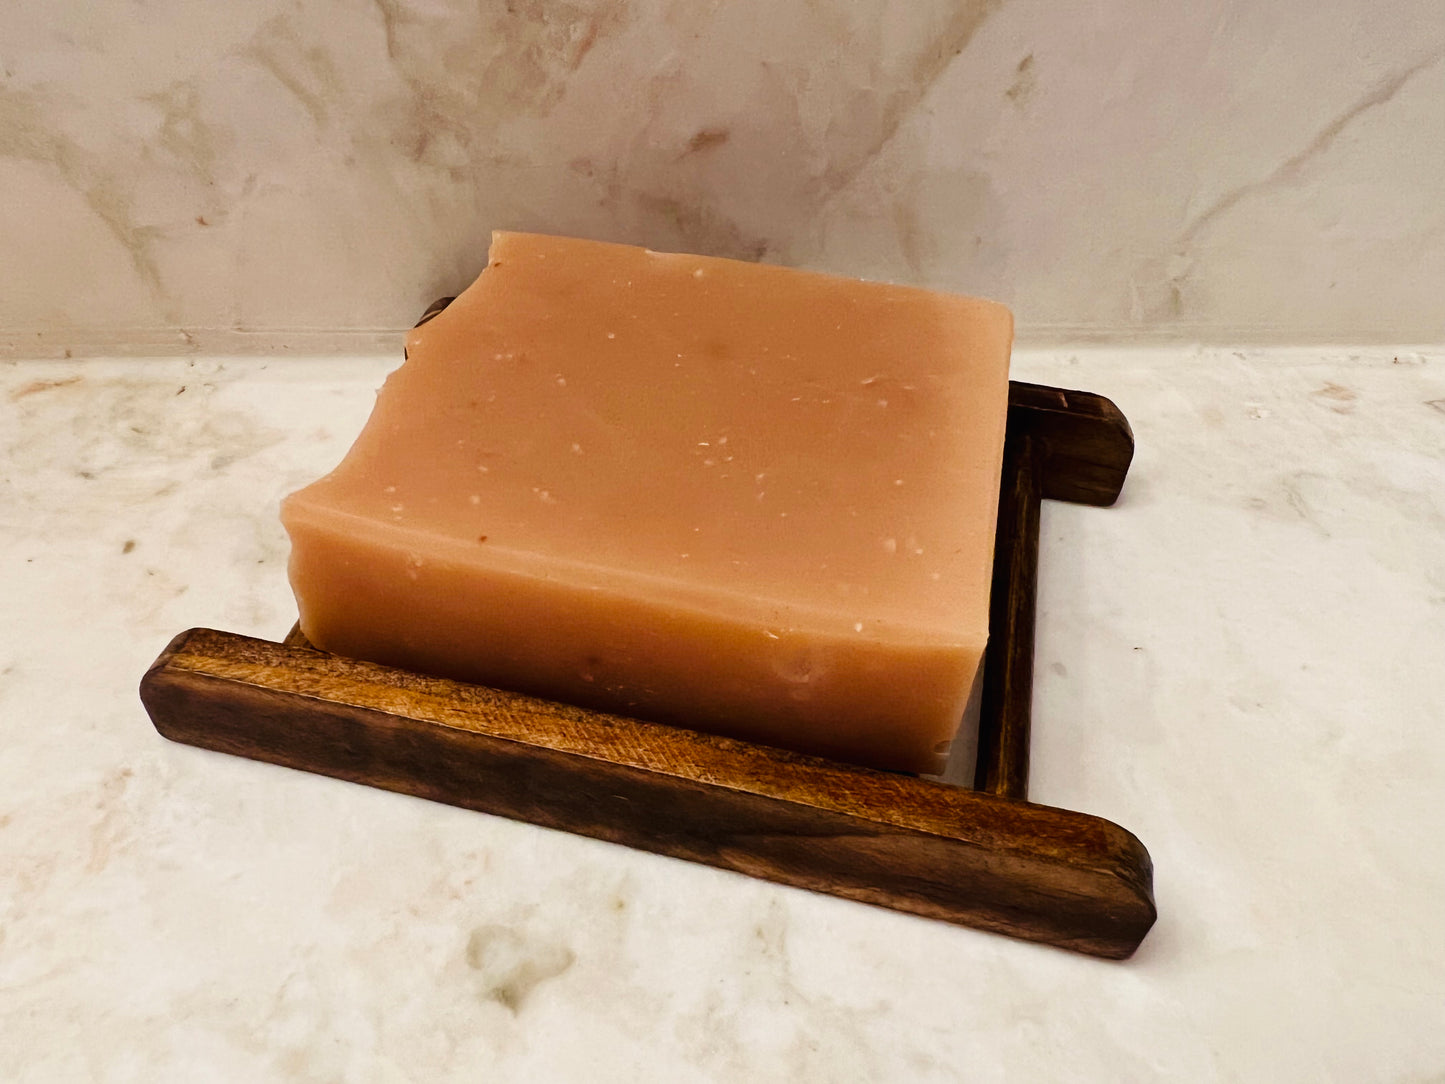 Wooden soap dish